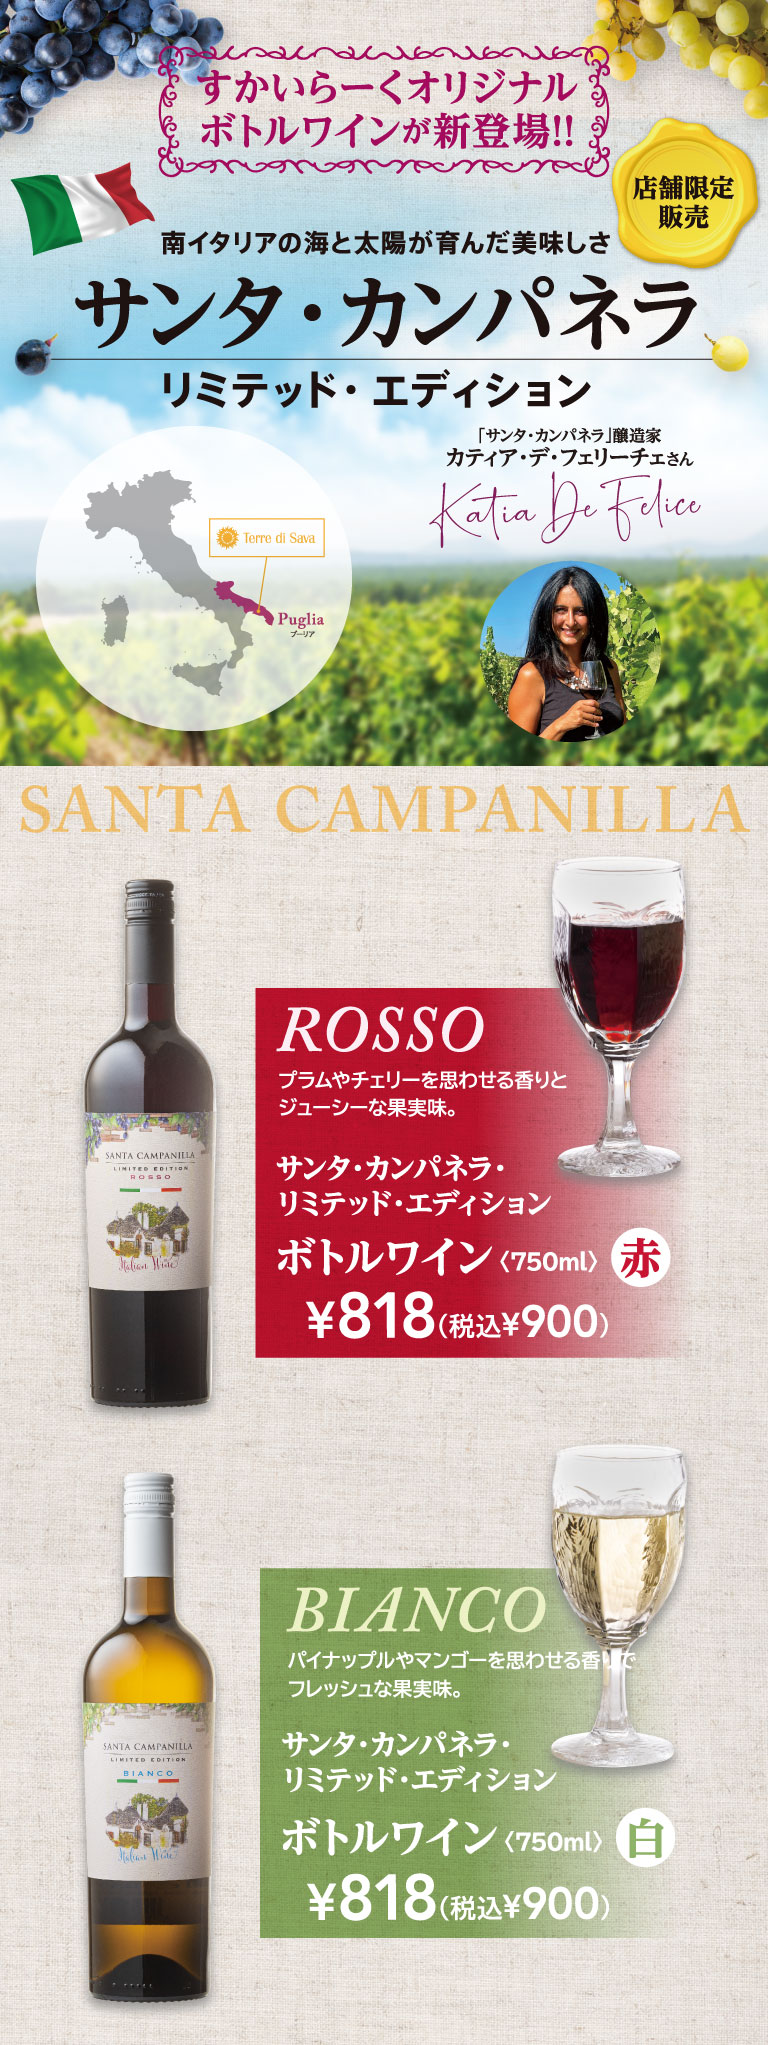 Santa Campanella 限量版瓶酒红白云雀（すかいらーく）原味